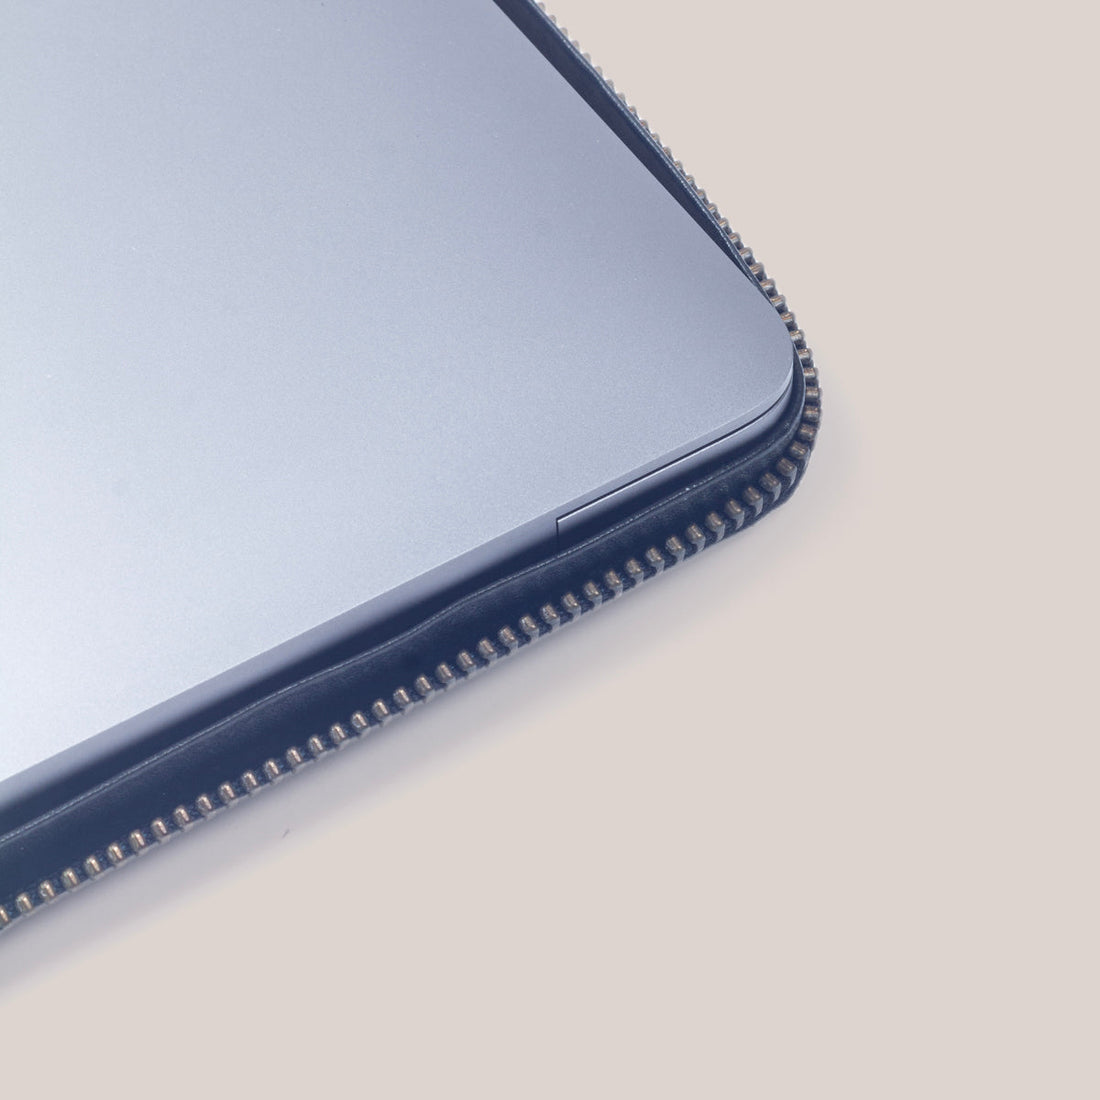 Microsoft Surface Book 13.5 Zippered Laptop Case - Felt and Tan Crunch